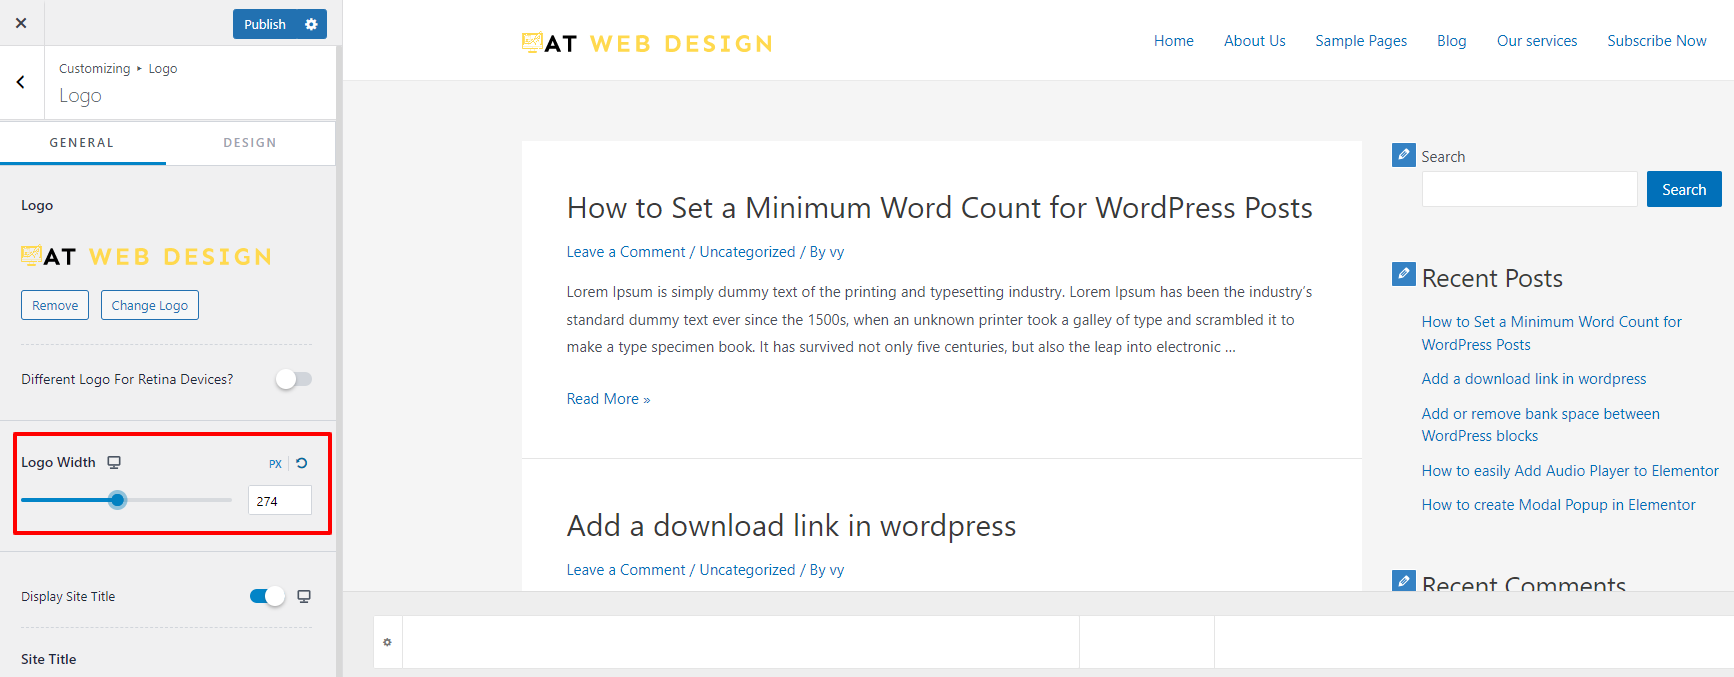 Change Your Logo Size In Wordpress 2